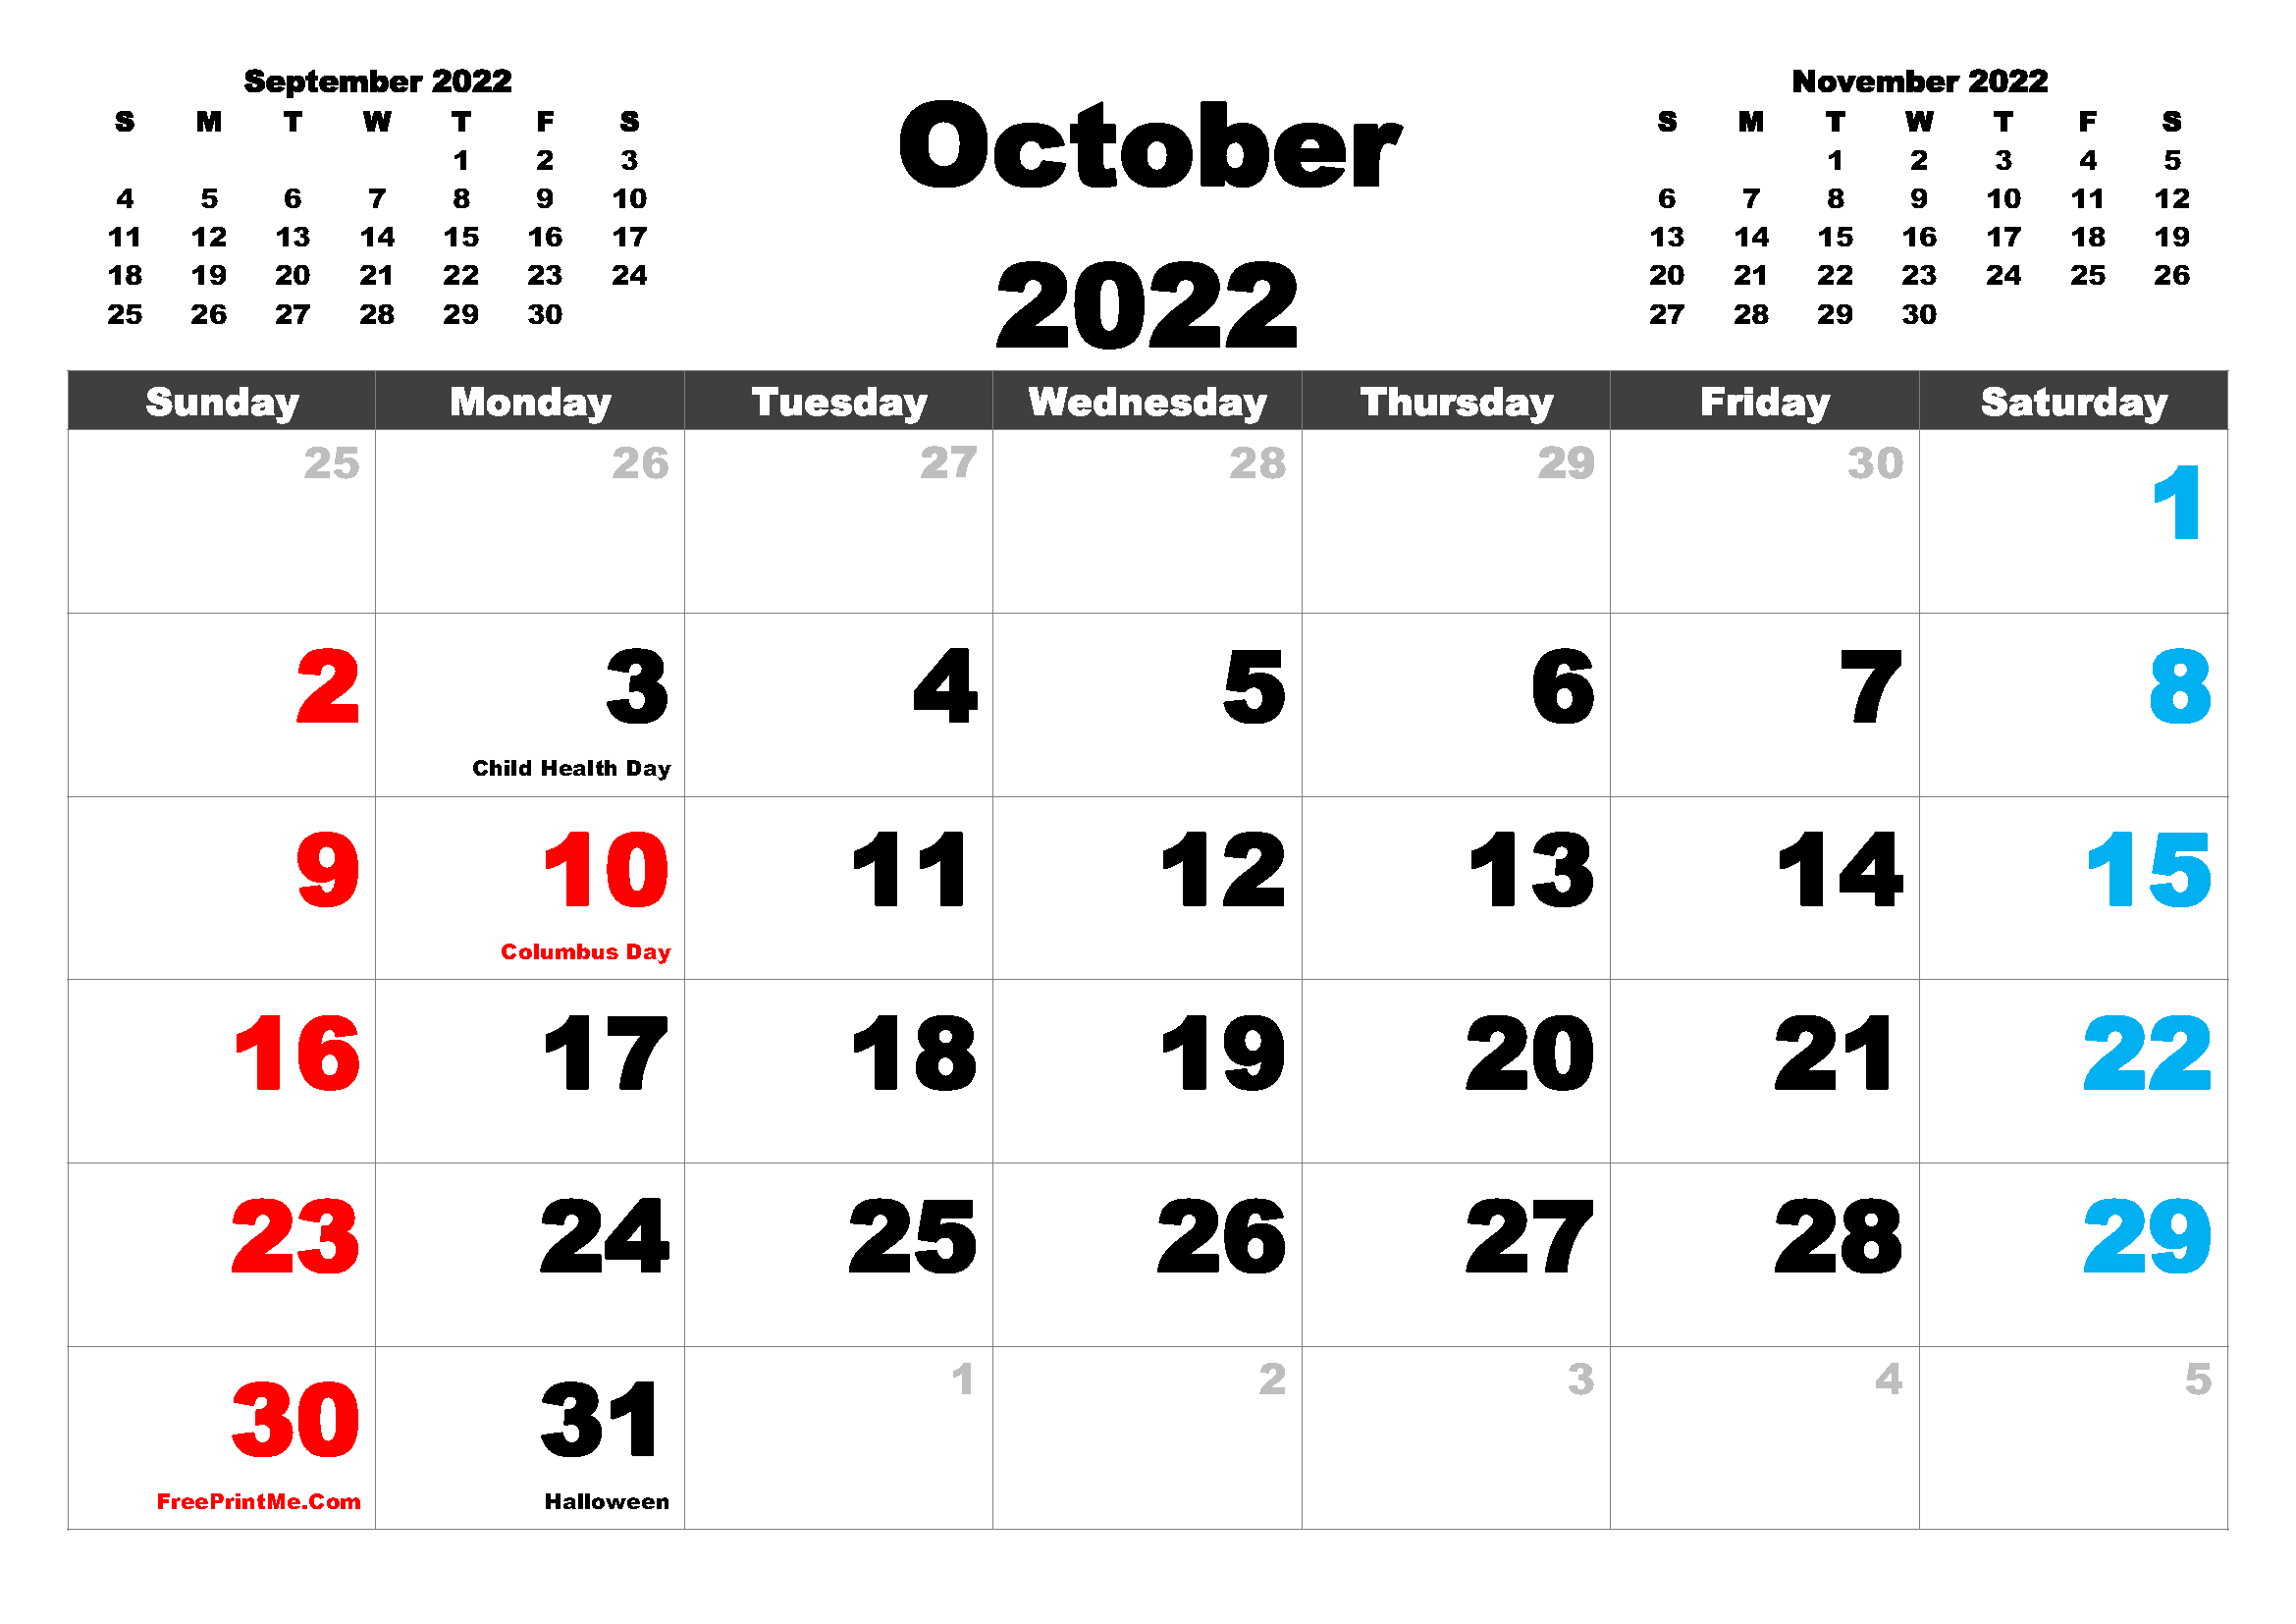 Free Printable October 2022 Calendar Template Free Printable October 2022 Calendar Pdf, Png Image